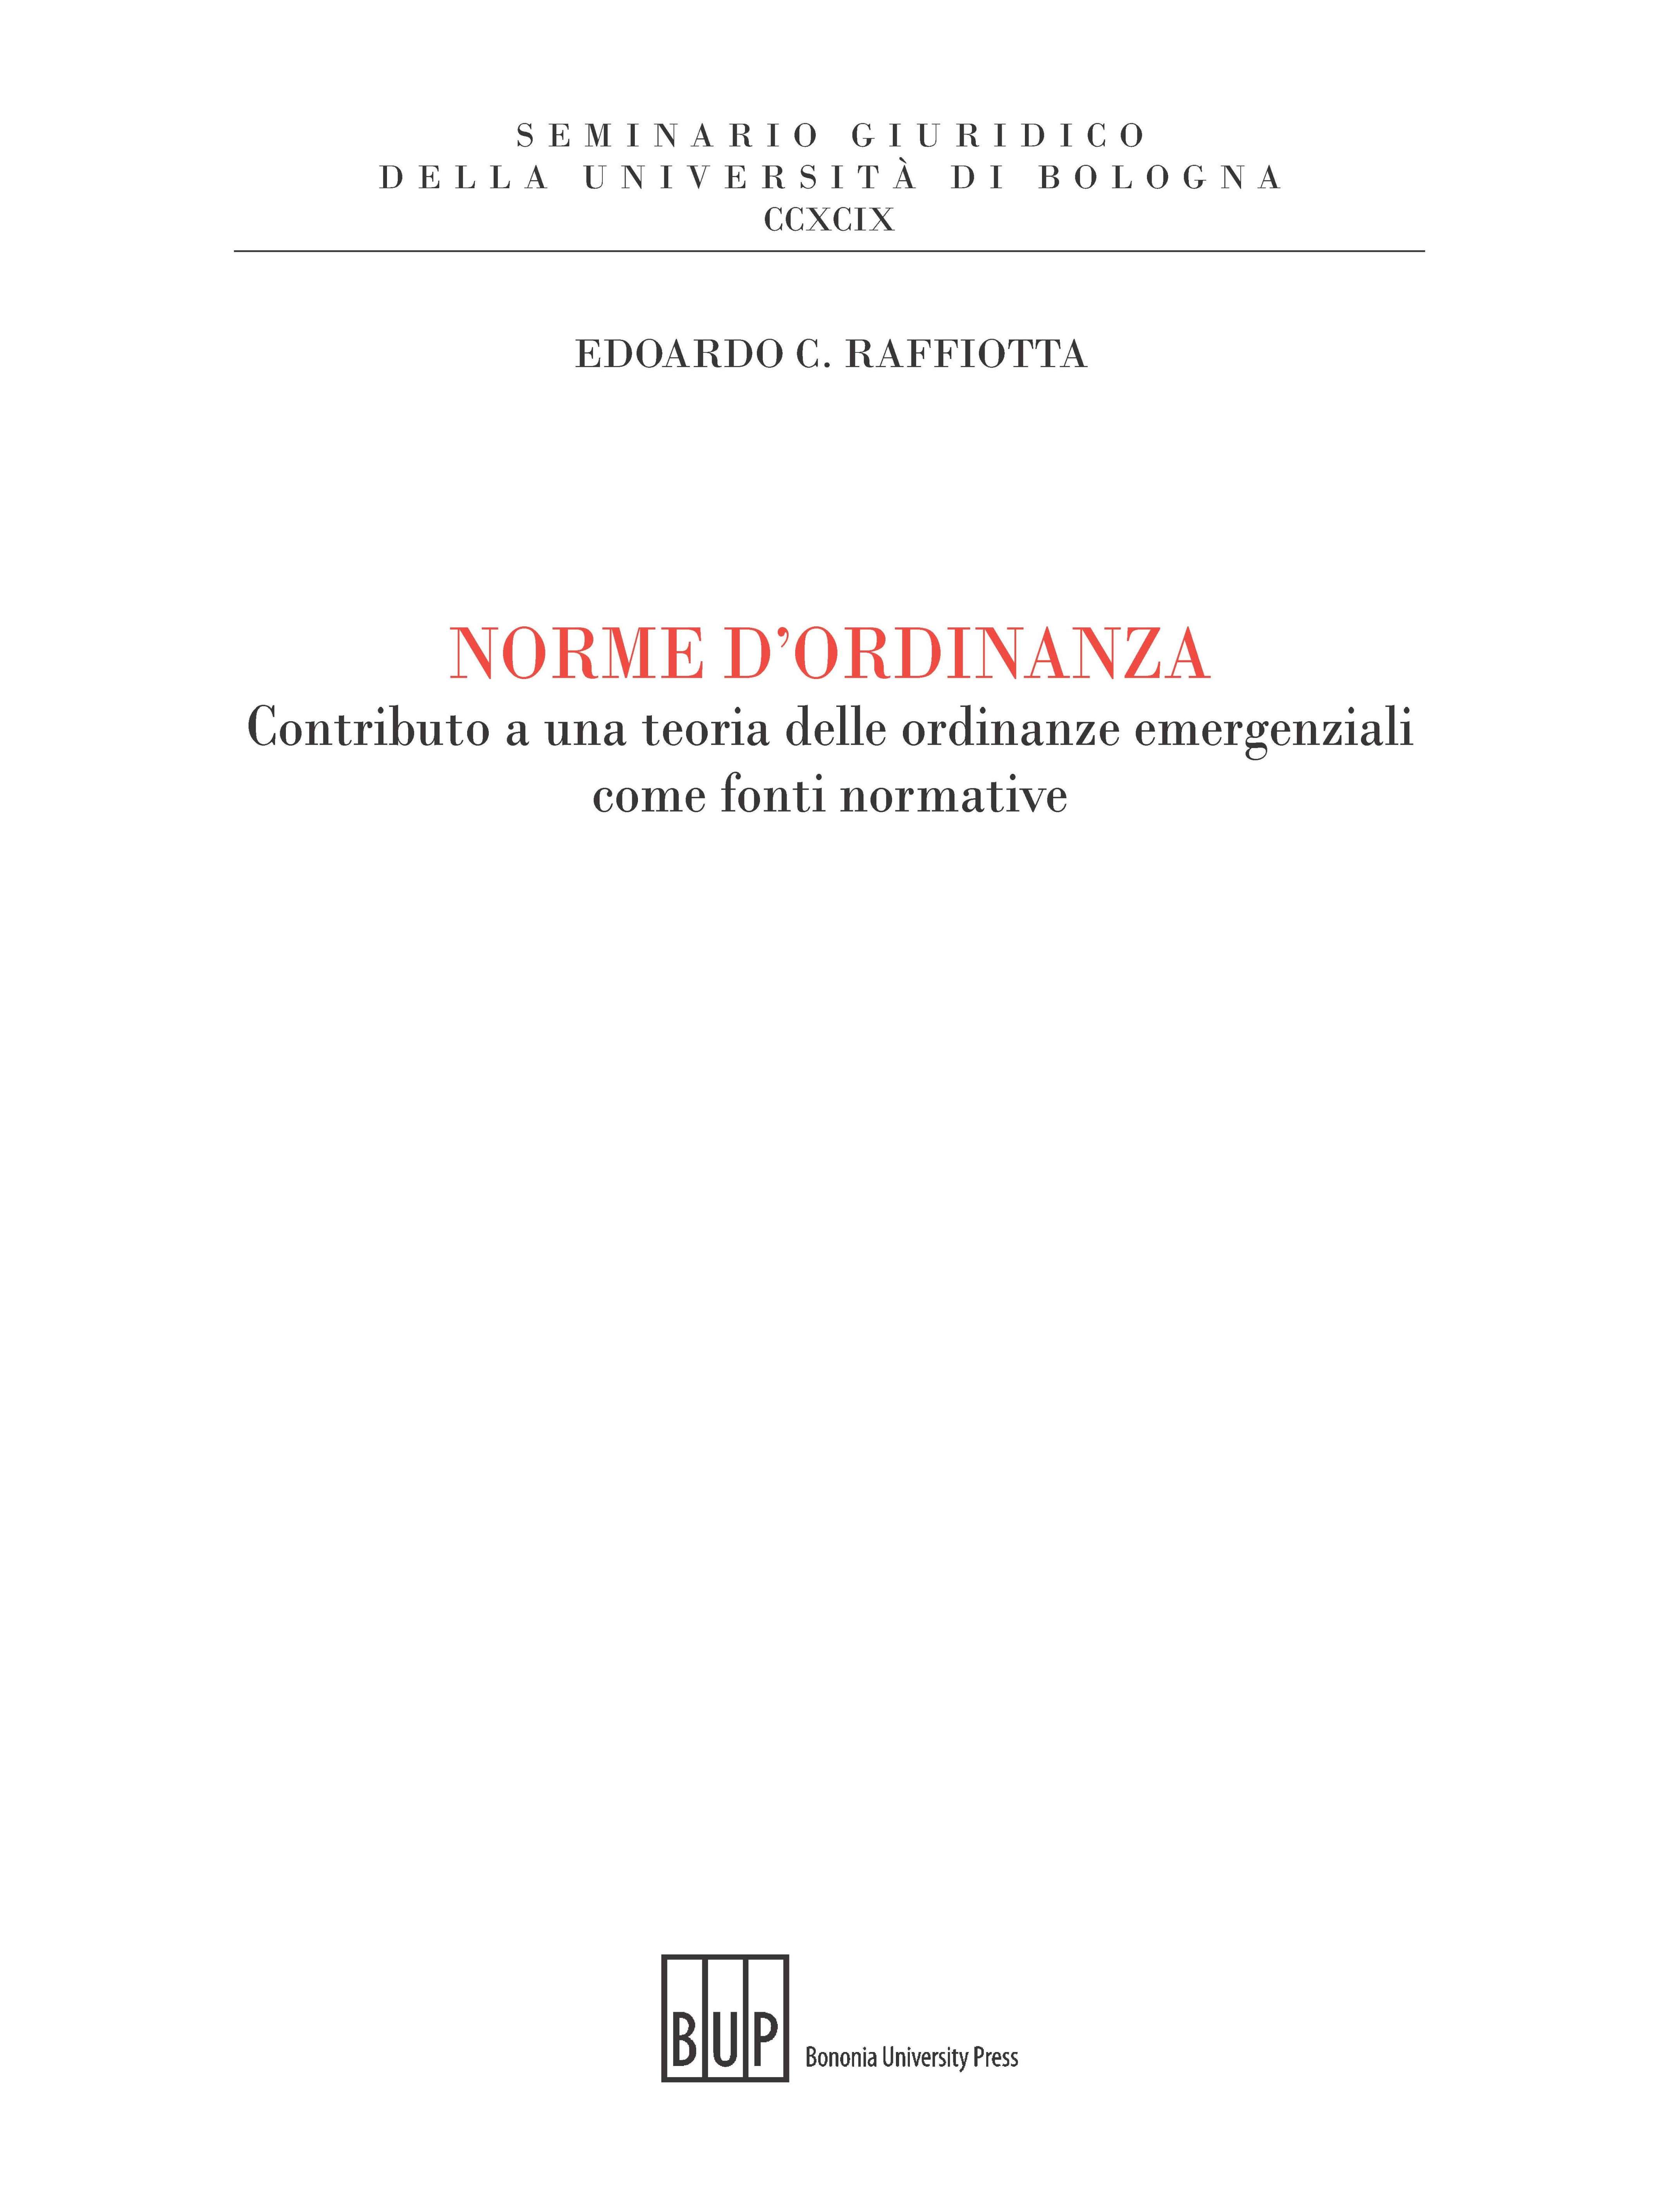 Norme d’ordinanza - Bologna University Press